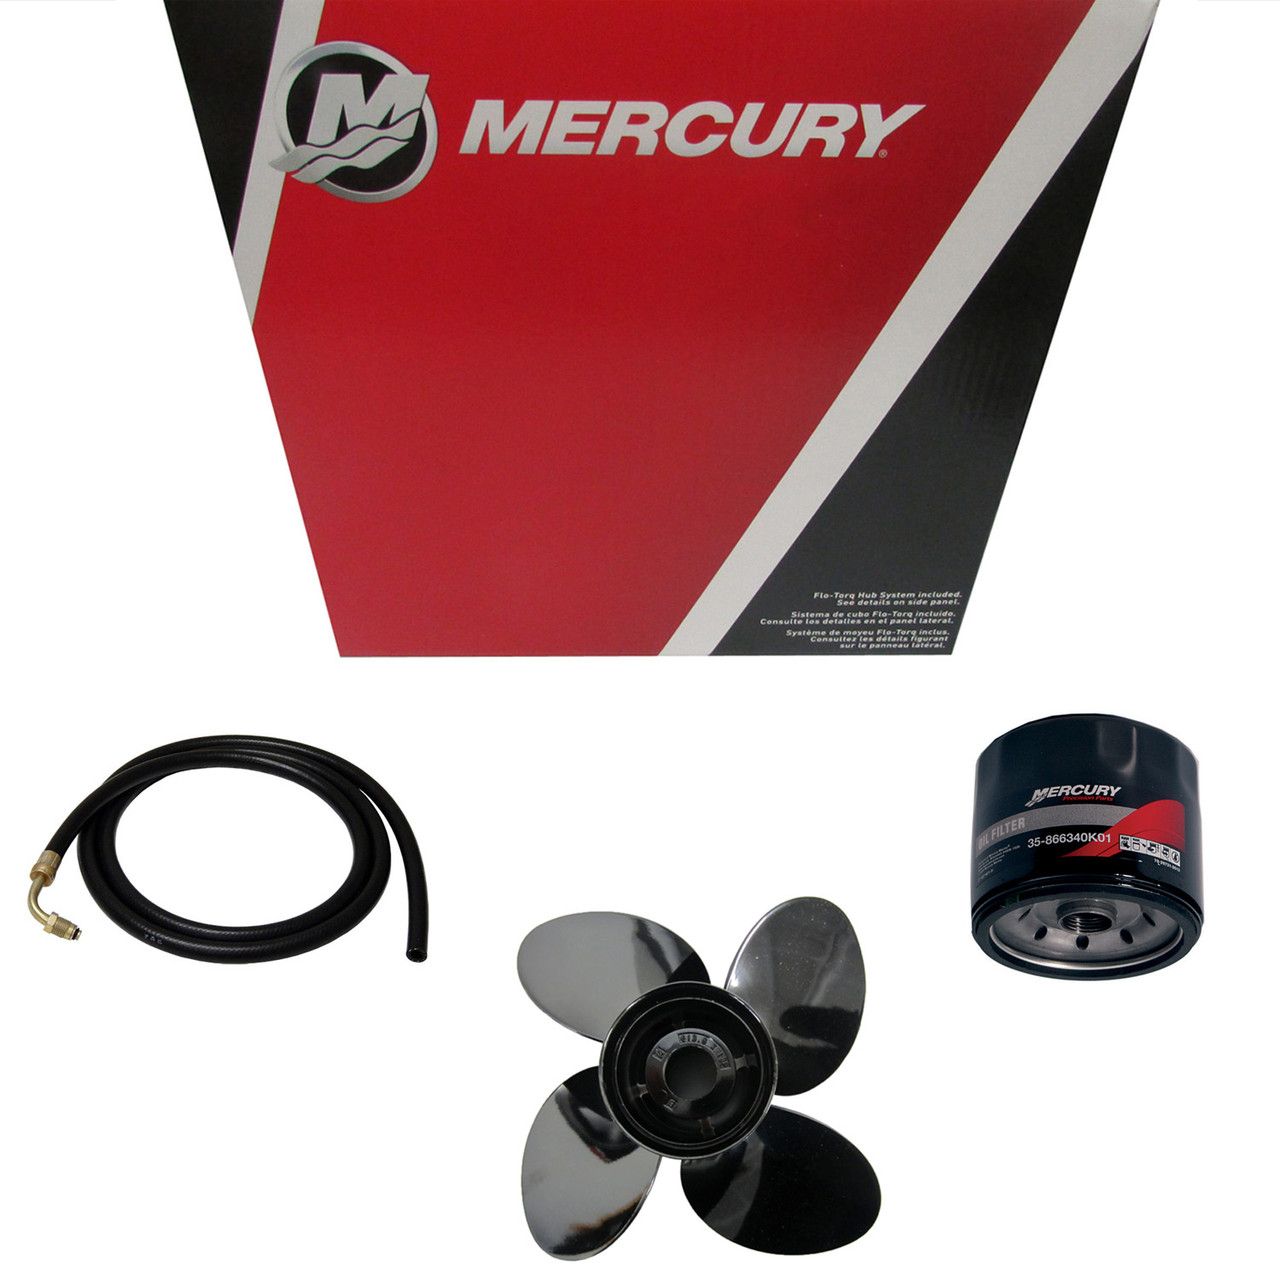 Mercury Marine / Mercruiser New OEM Cable Kit, 84-821945A57